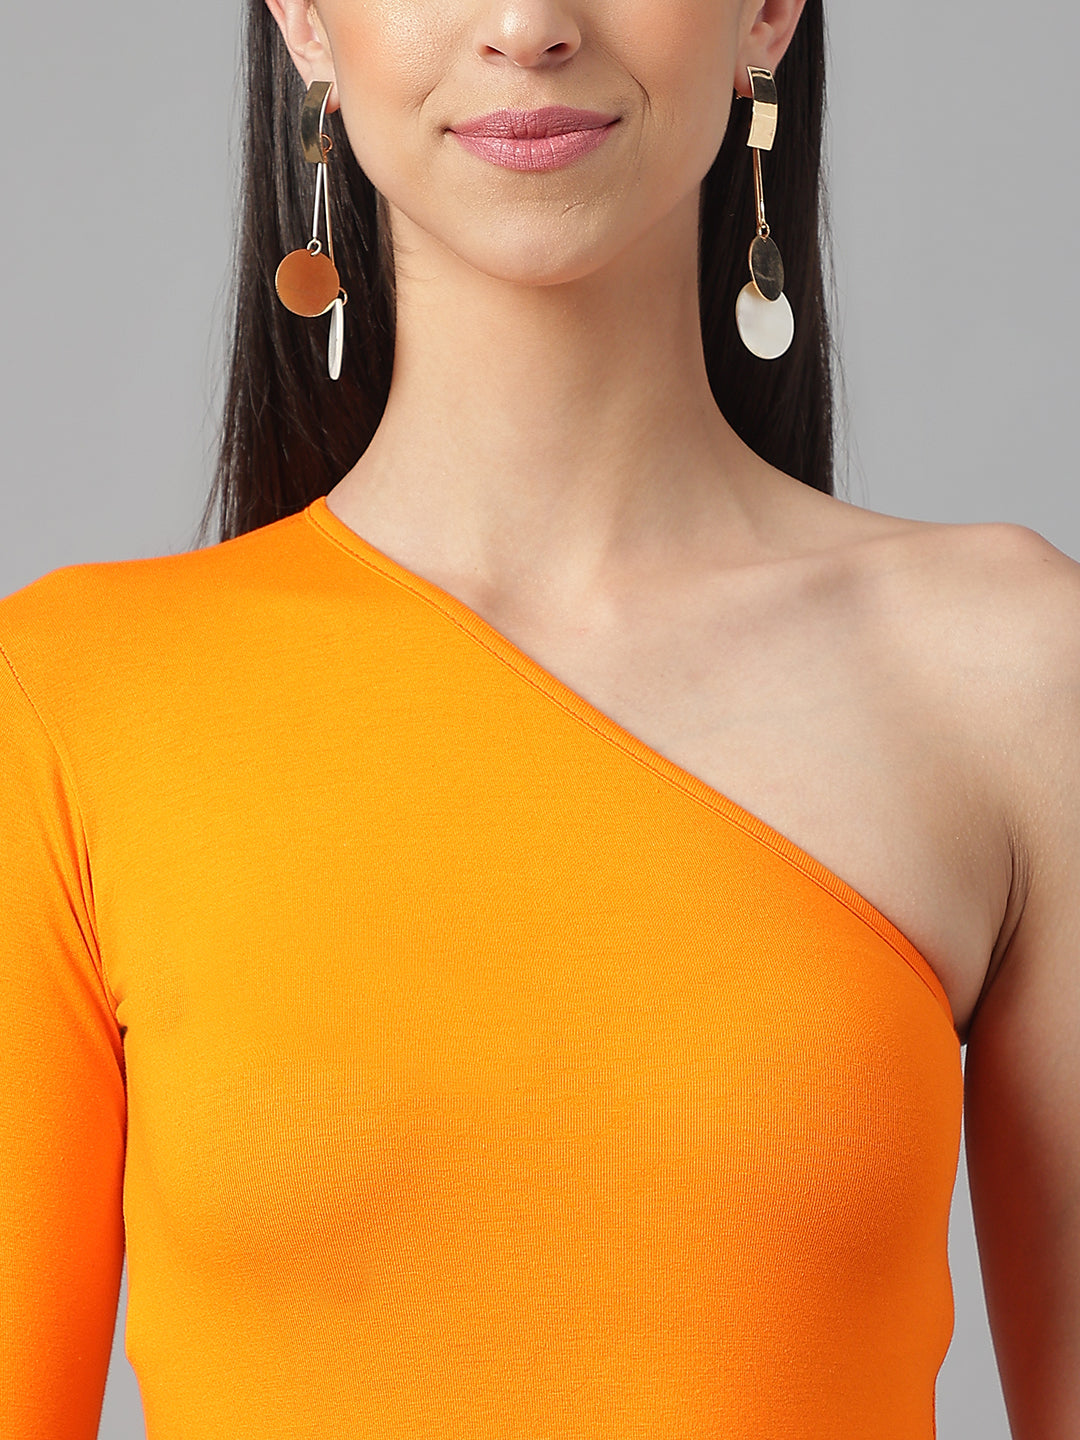 Senorita One Shoulder Dress - Orange